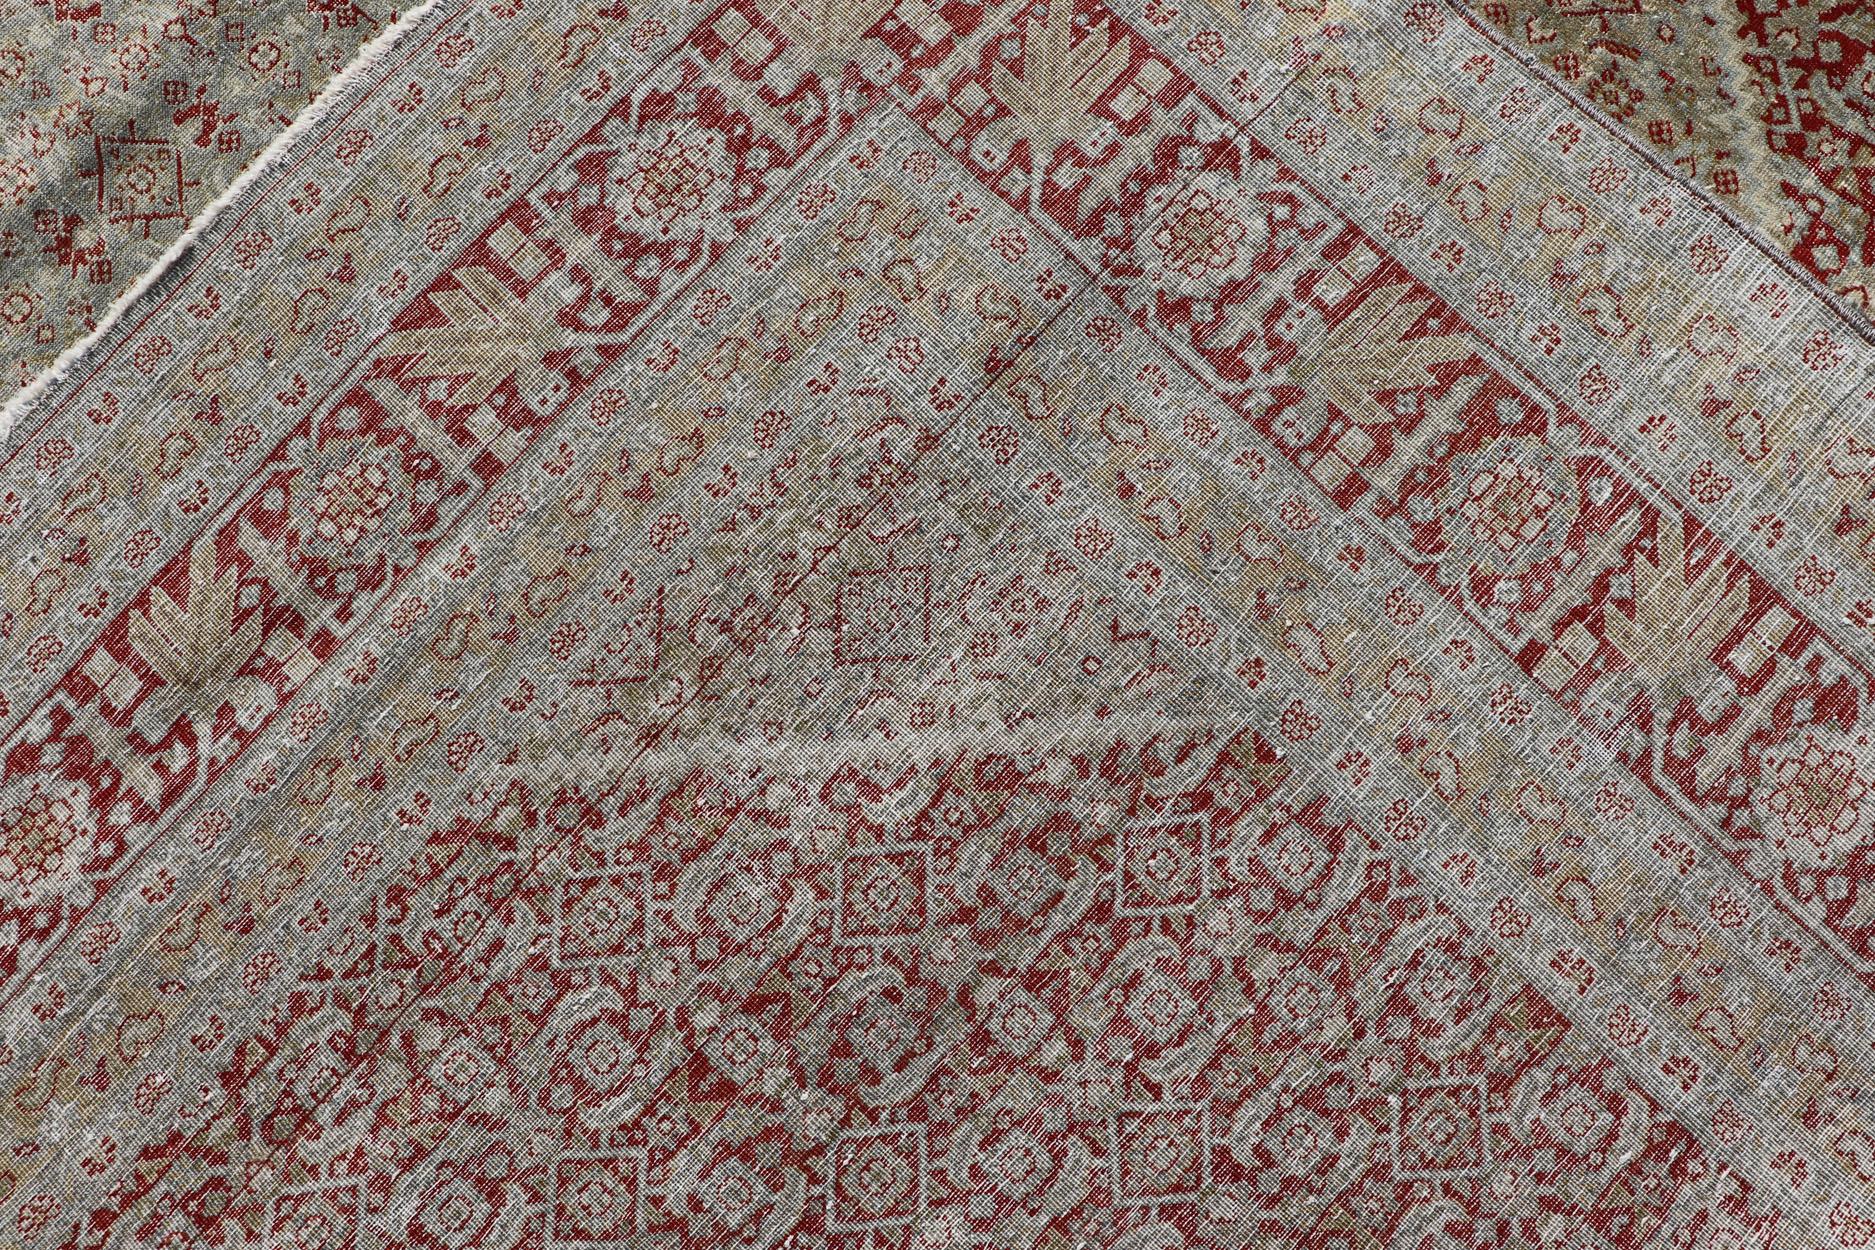 Antique Persian Tabriz Distressed Carpet with Geometric Diamond Design For Sale 3